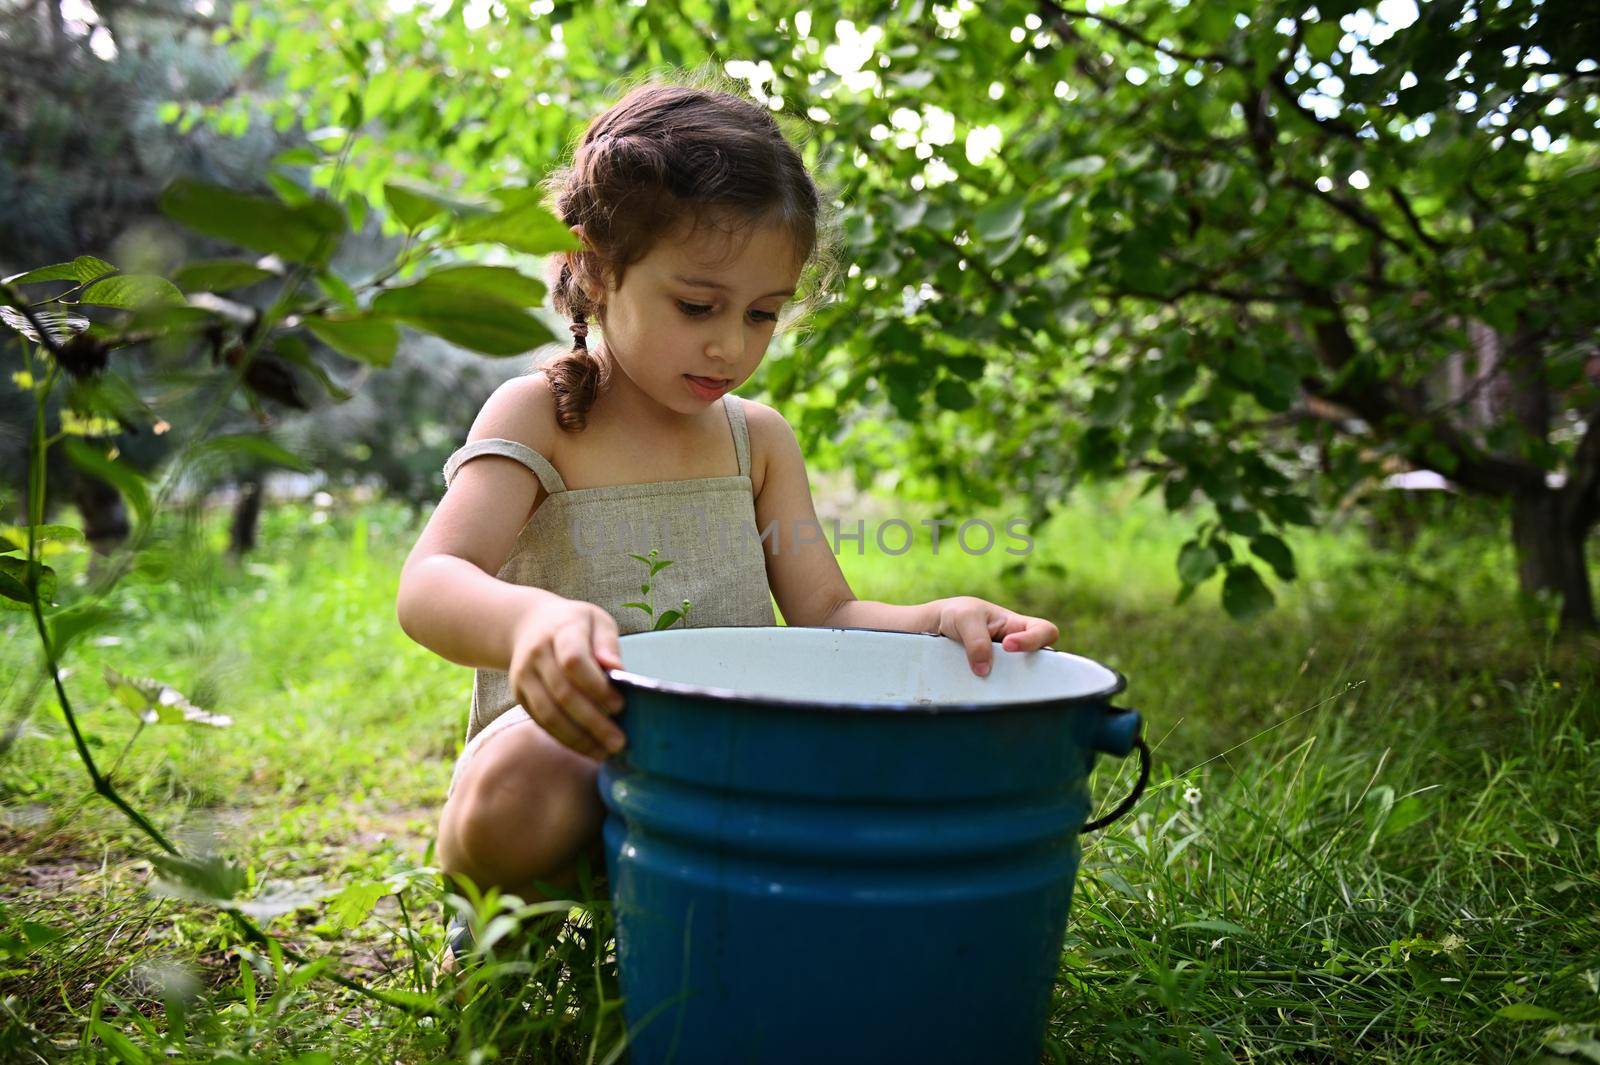 Cute baby girl sitting in the garden and peeking into a metal bucket. Gardening